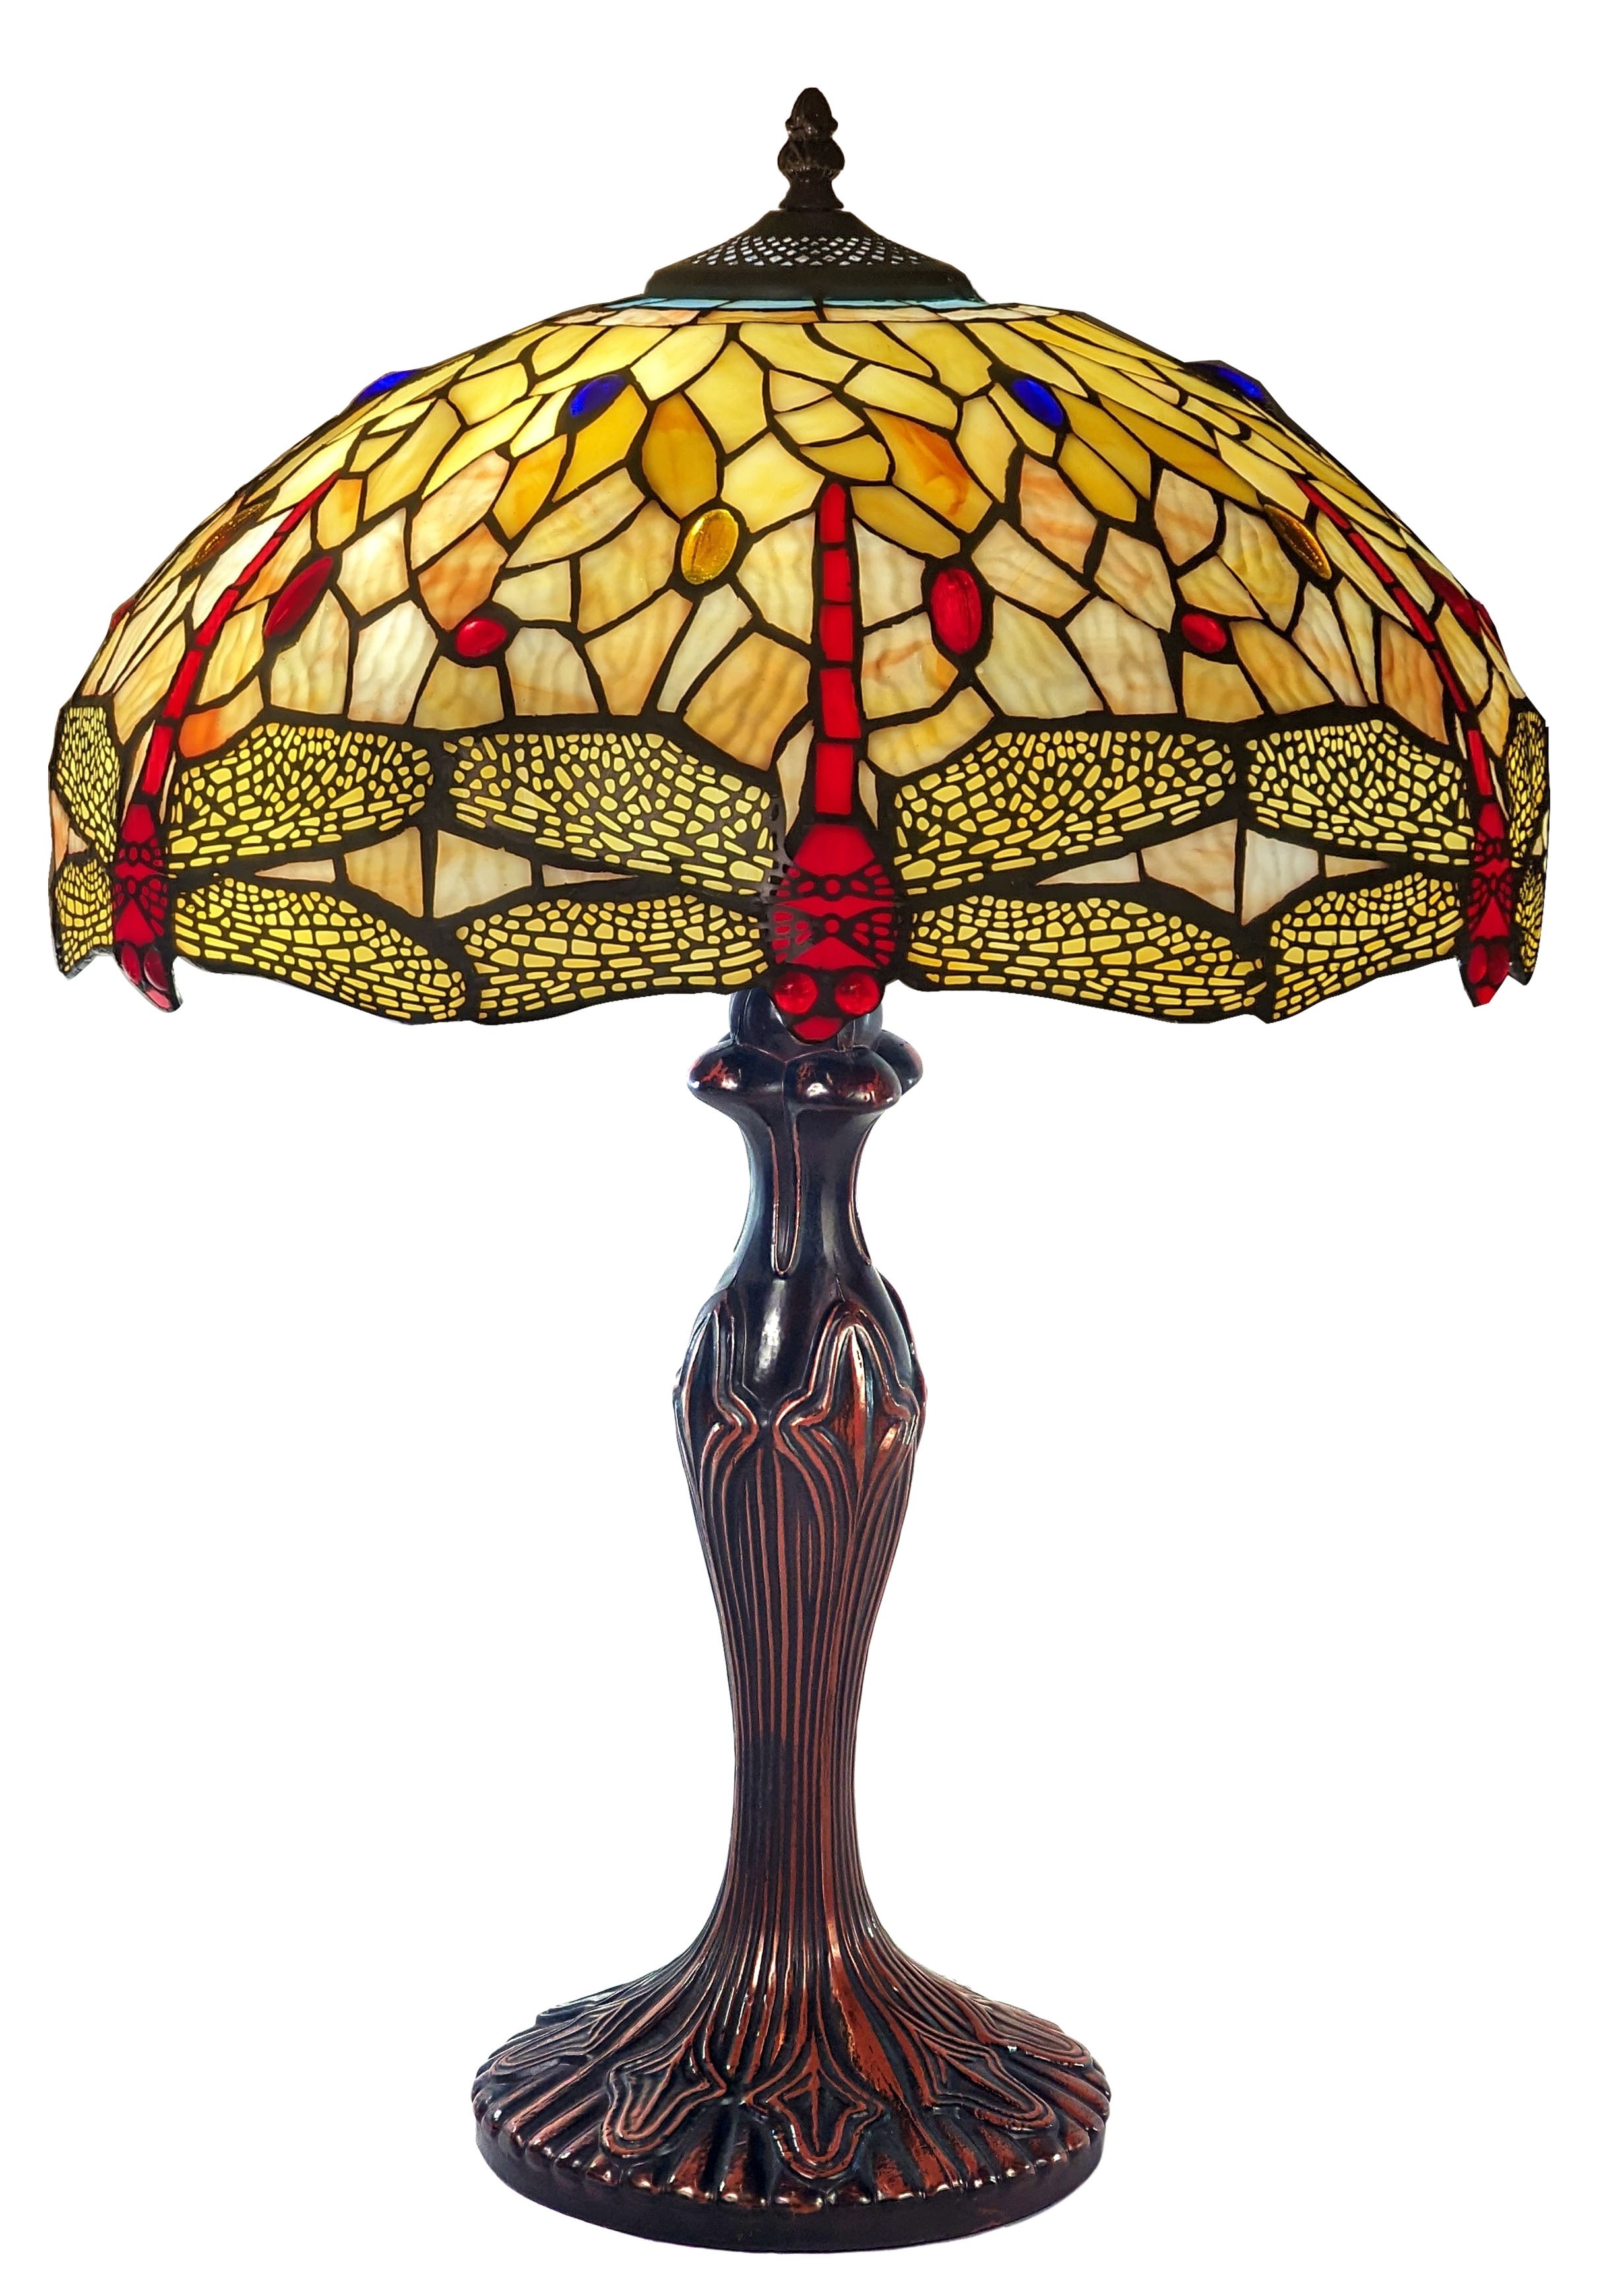 Large Dragonfly Tiffany Table Lamp 59cm -Yellow / Cream